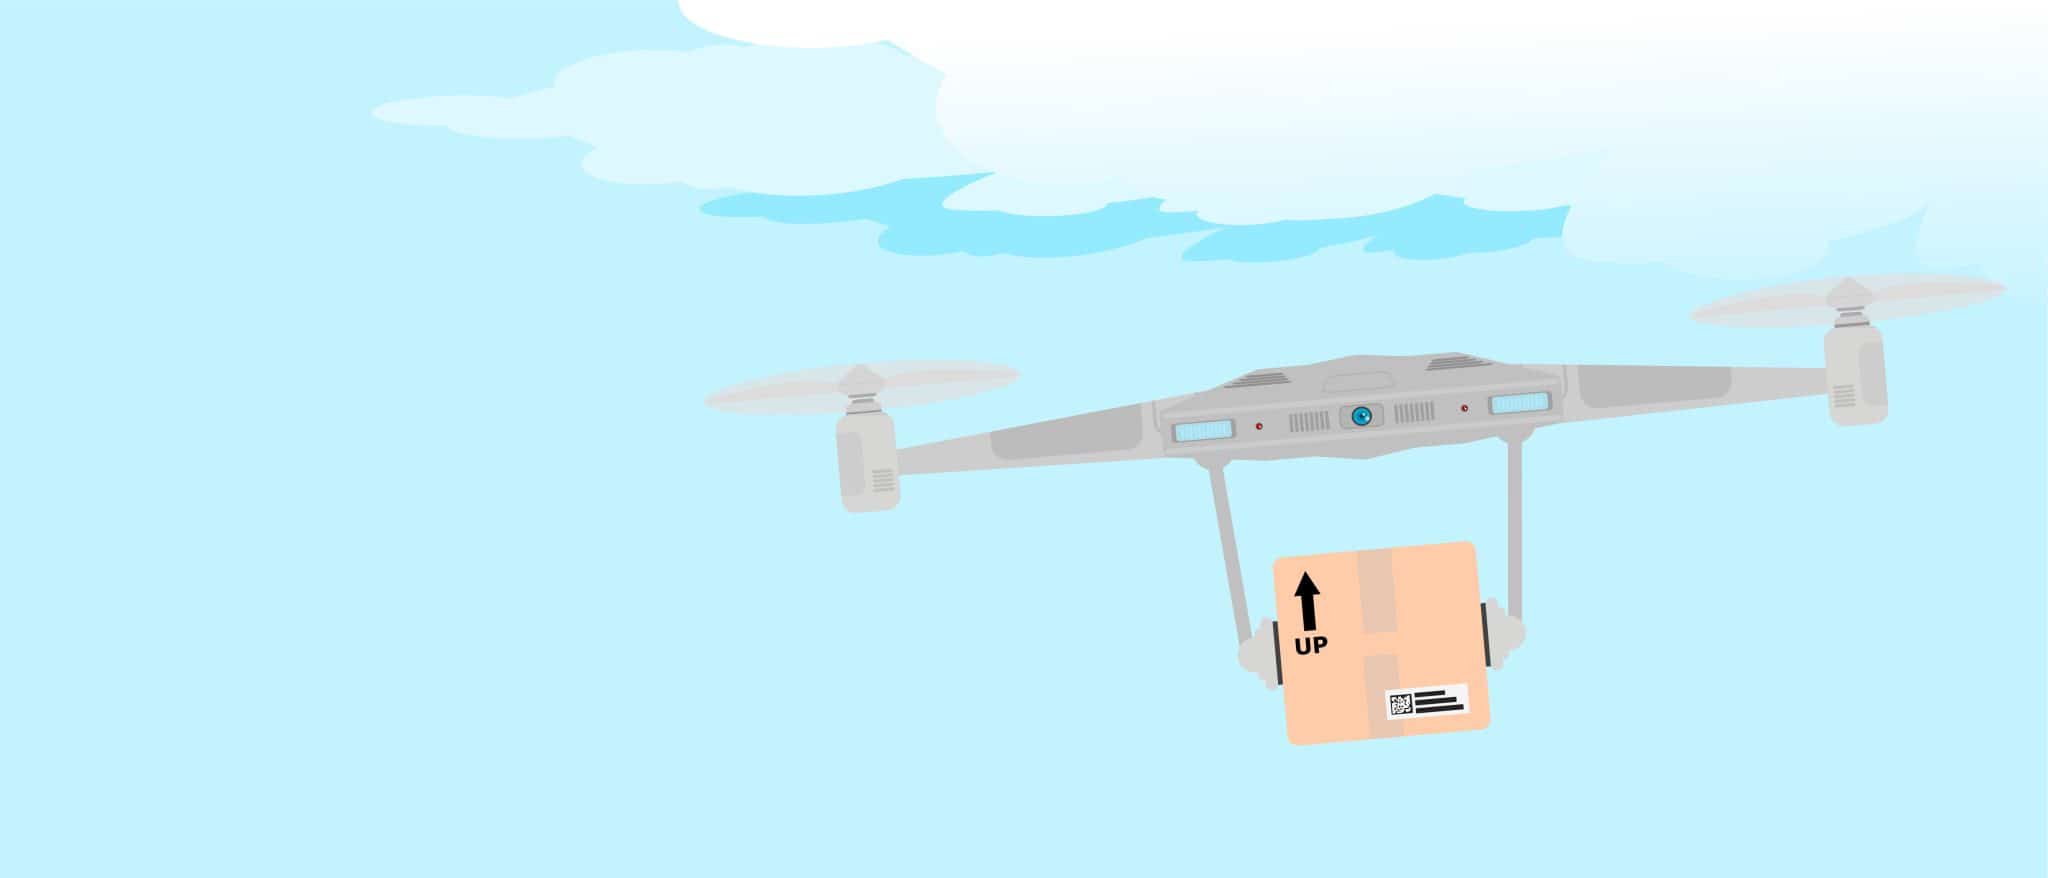 Dron transporte